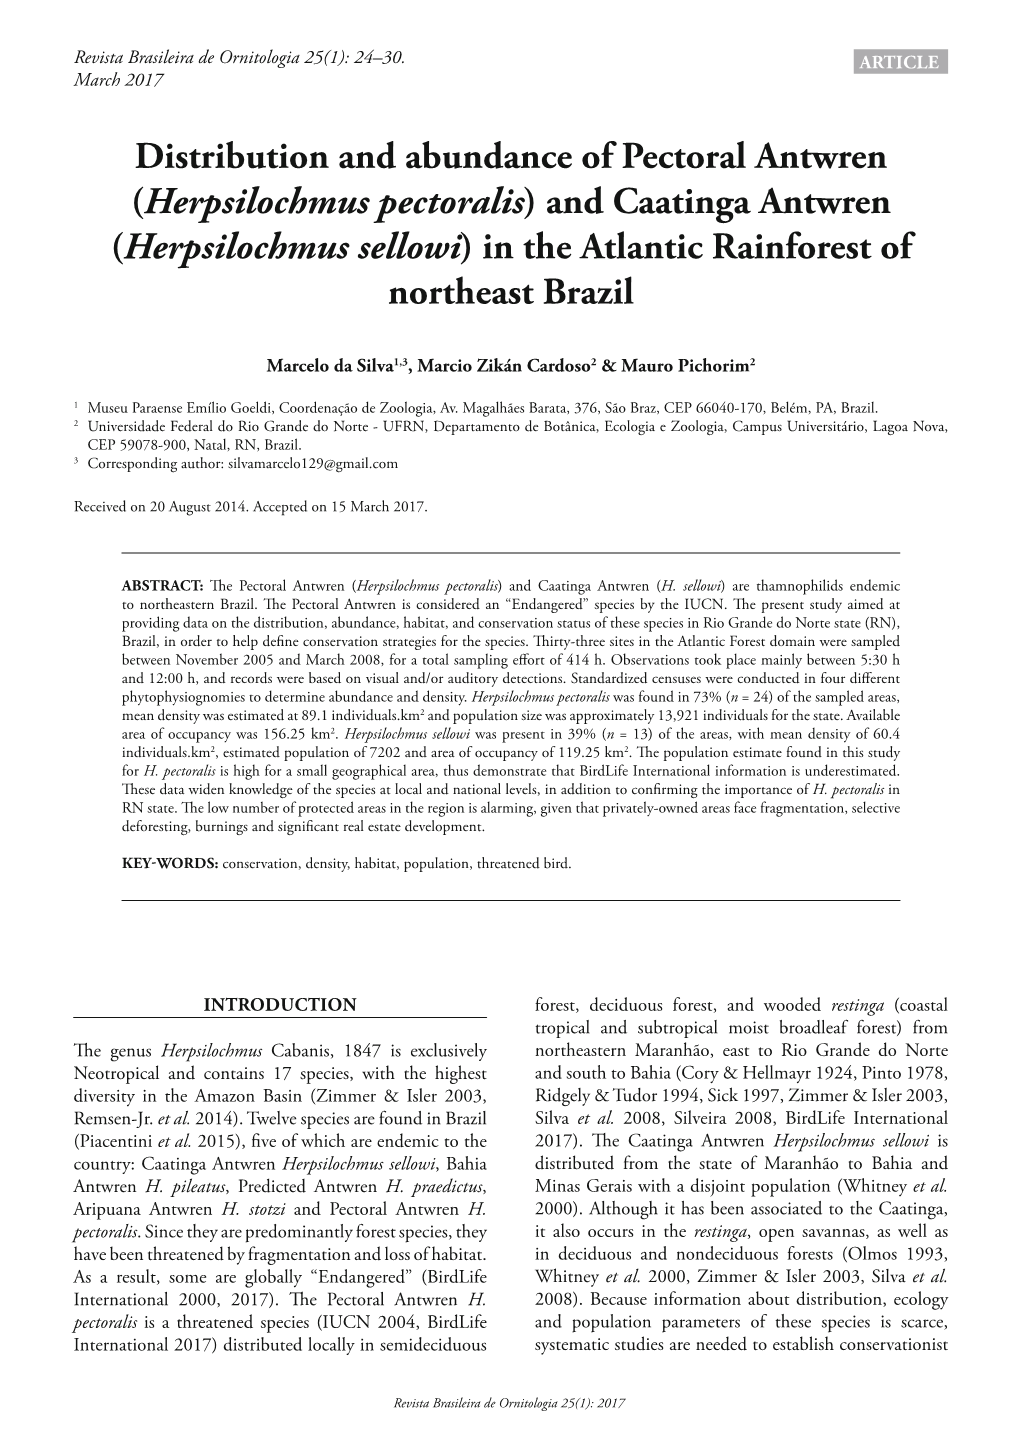 Distribution and Abundance of Pectoral Antwren (Herpsilochmus Pectoralis) and Caatinga Antwren (Herpsilochmus Sellowi) in the Atlantic Rainforest of Northeast Brazil